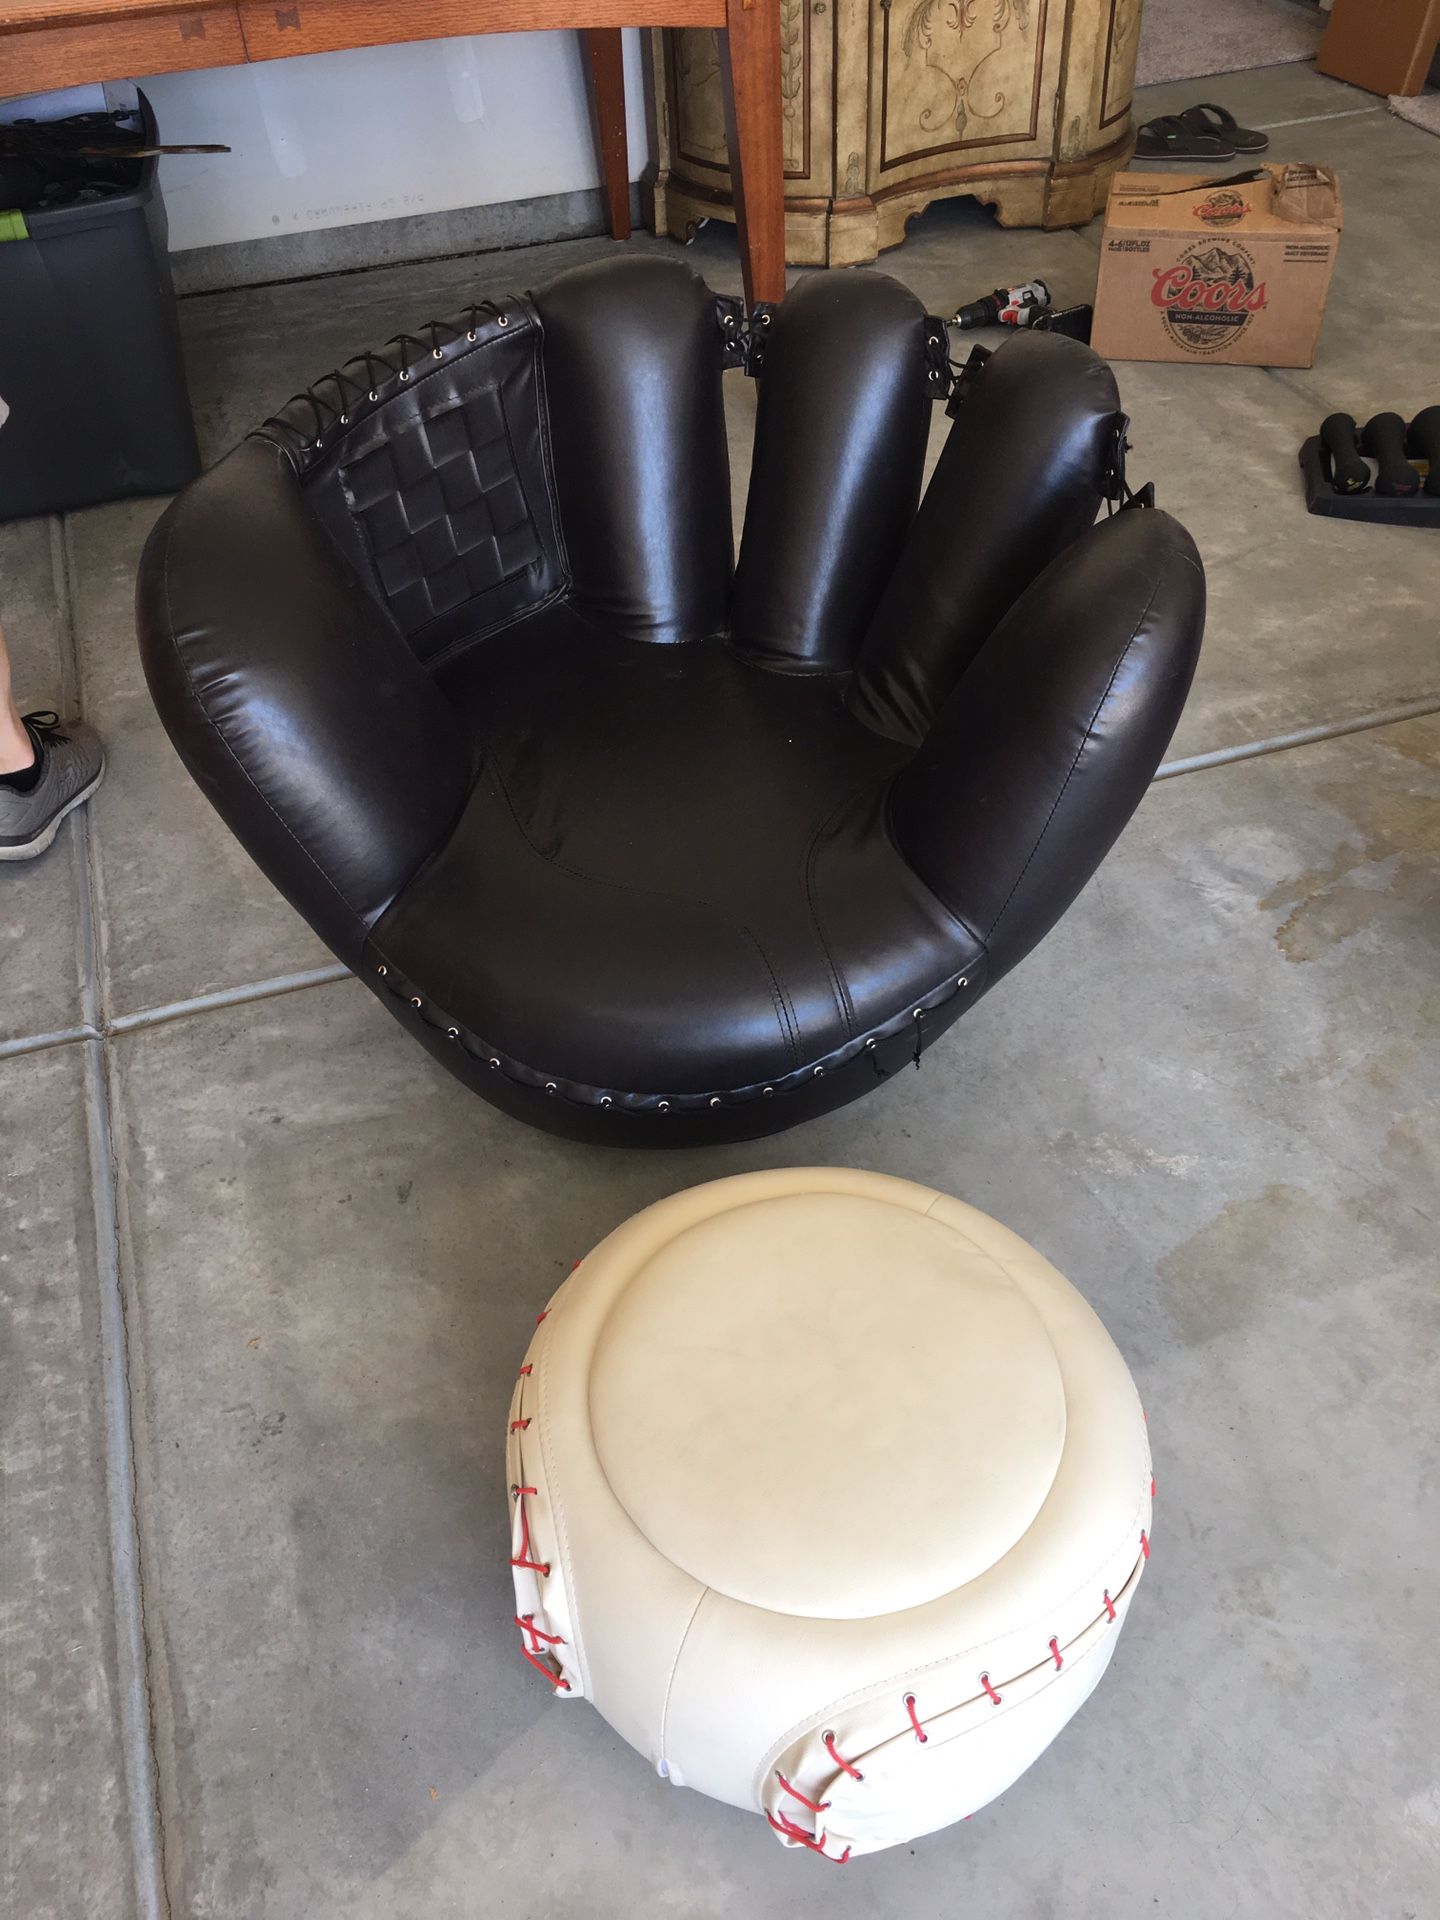 Baseball glove chair with ball storage